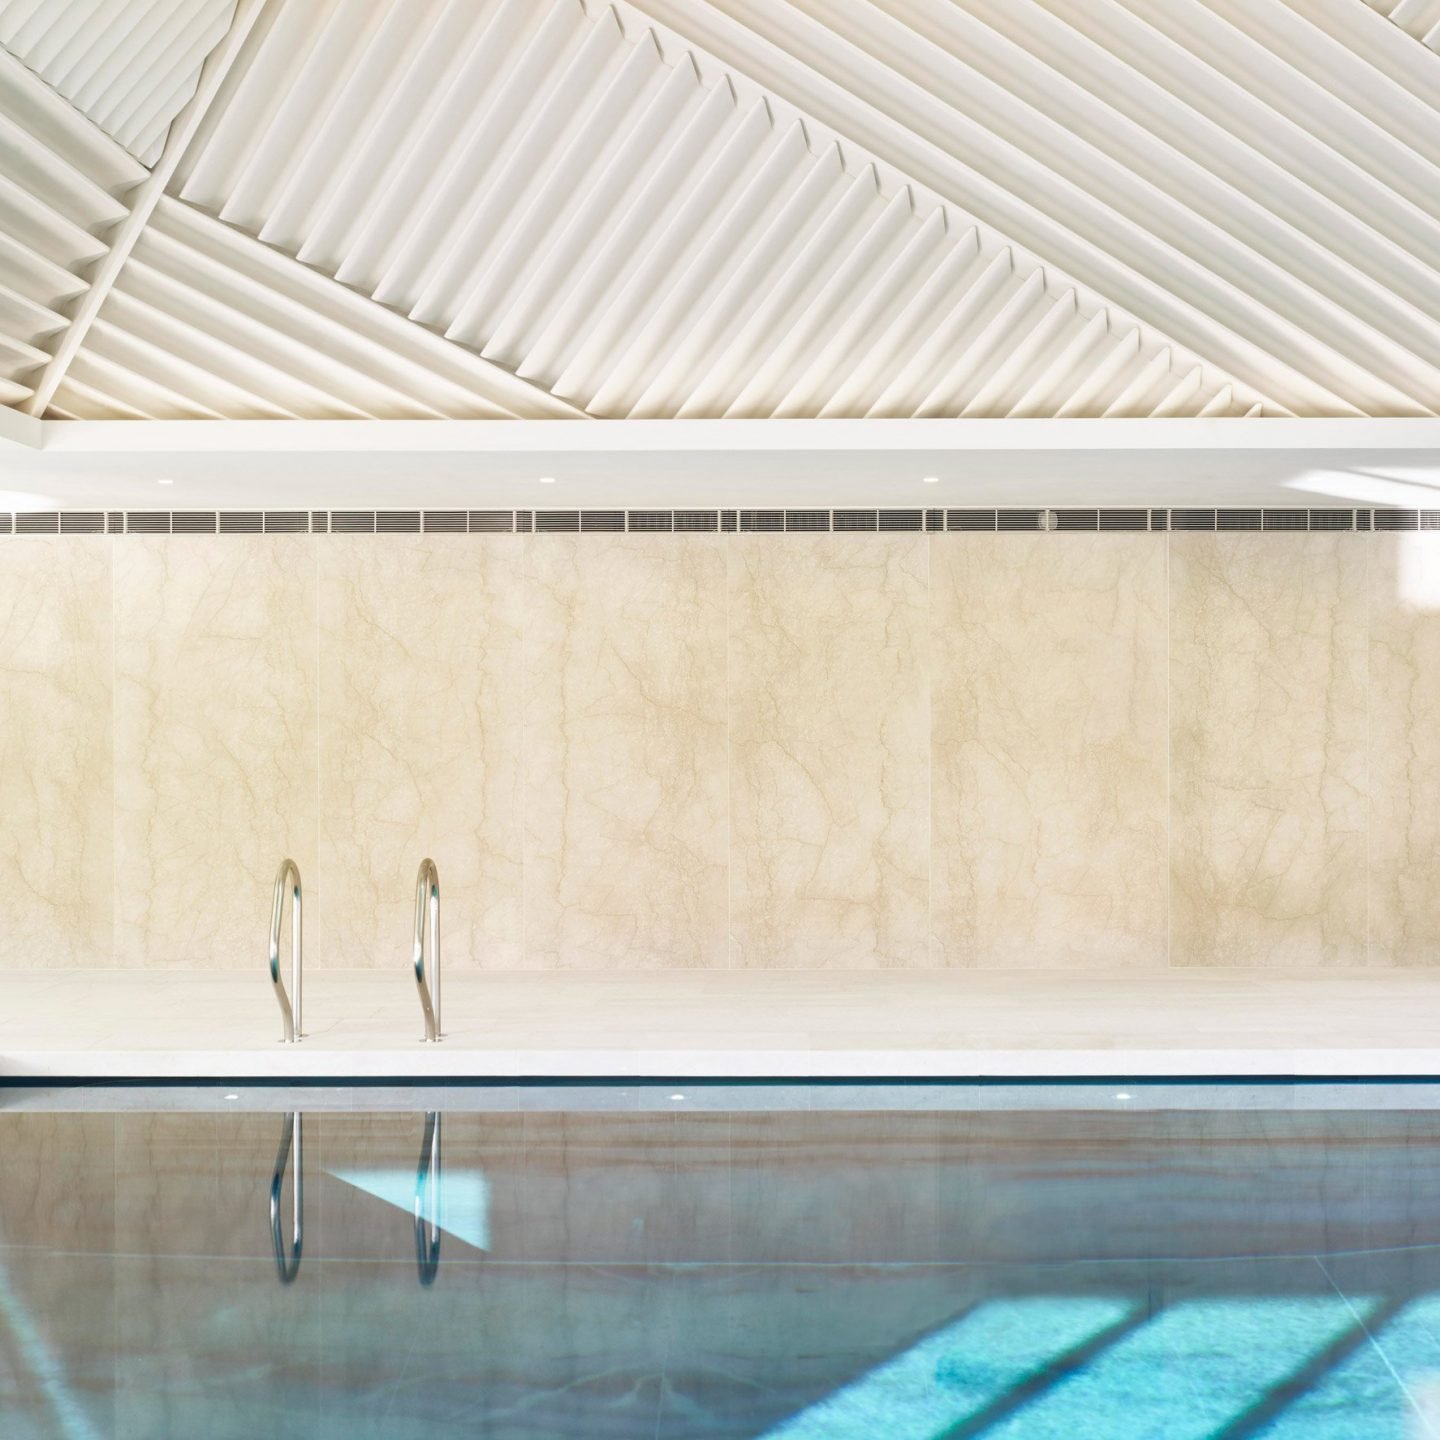 iGNANT-Architecture-Rafael-De-Cardenas-Pool-House-004